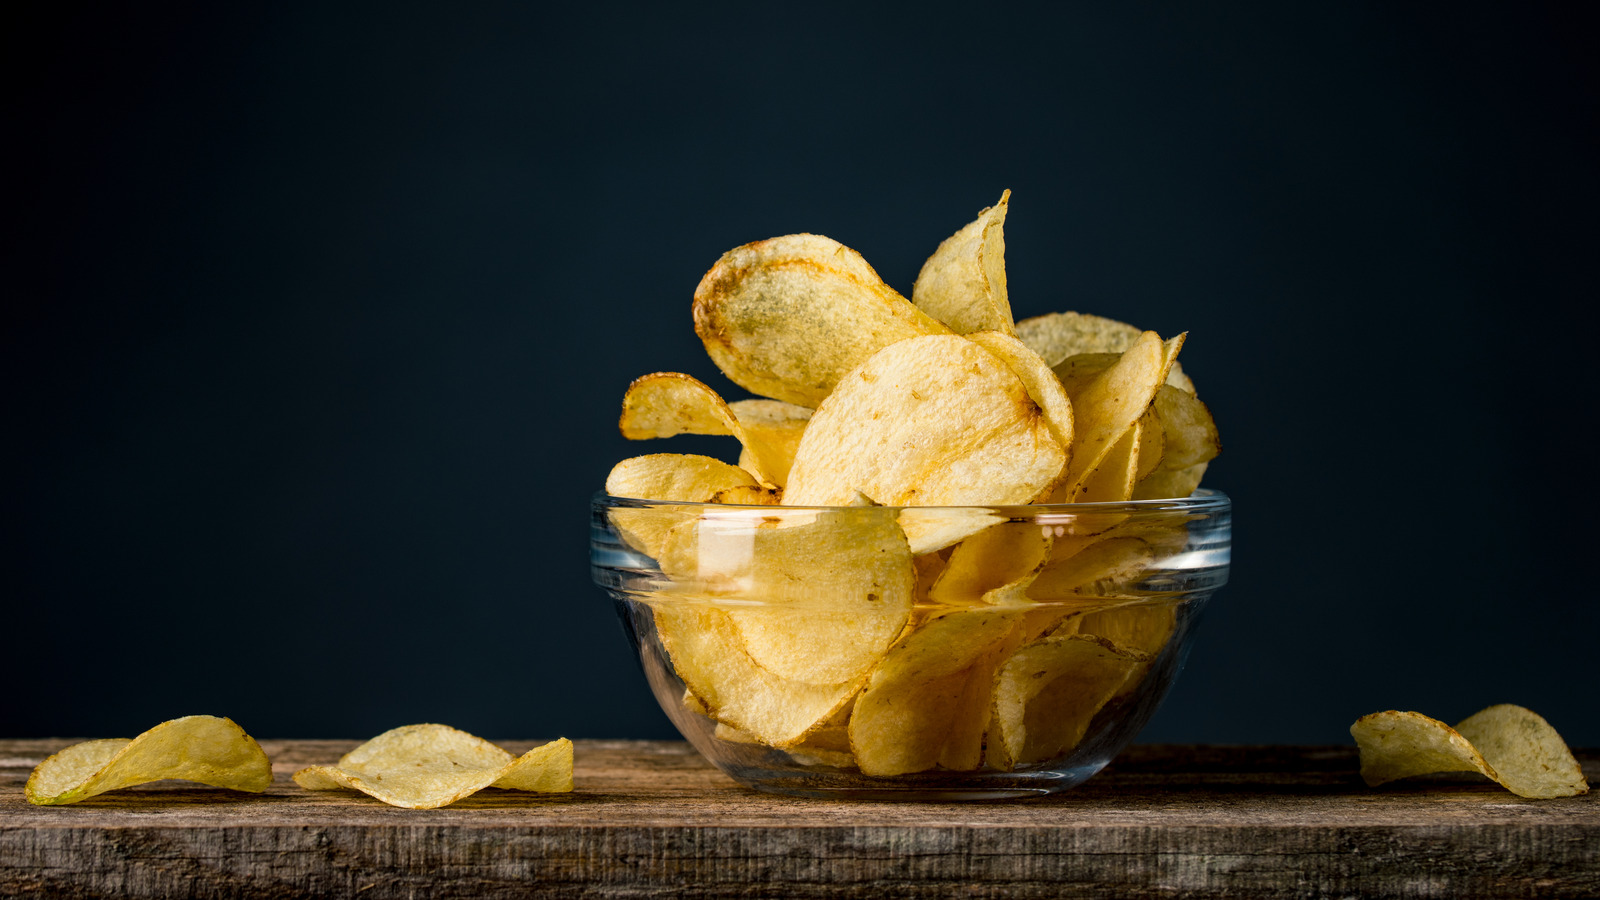 Are Kettle Chips Healthier Than Regular Potato Chips?